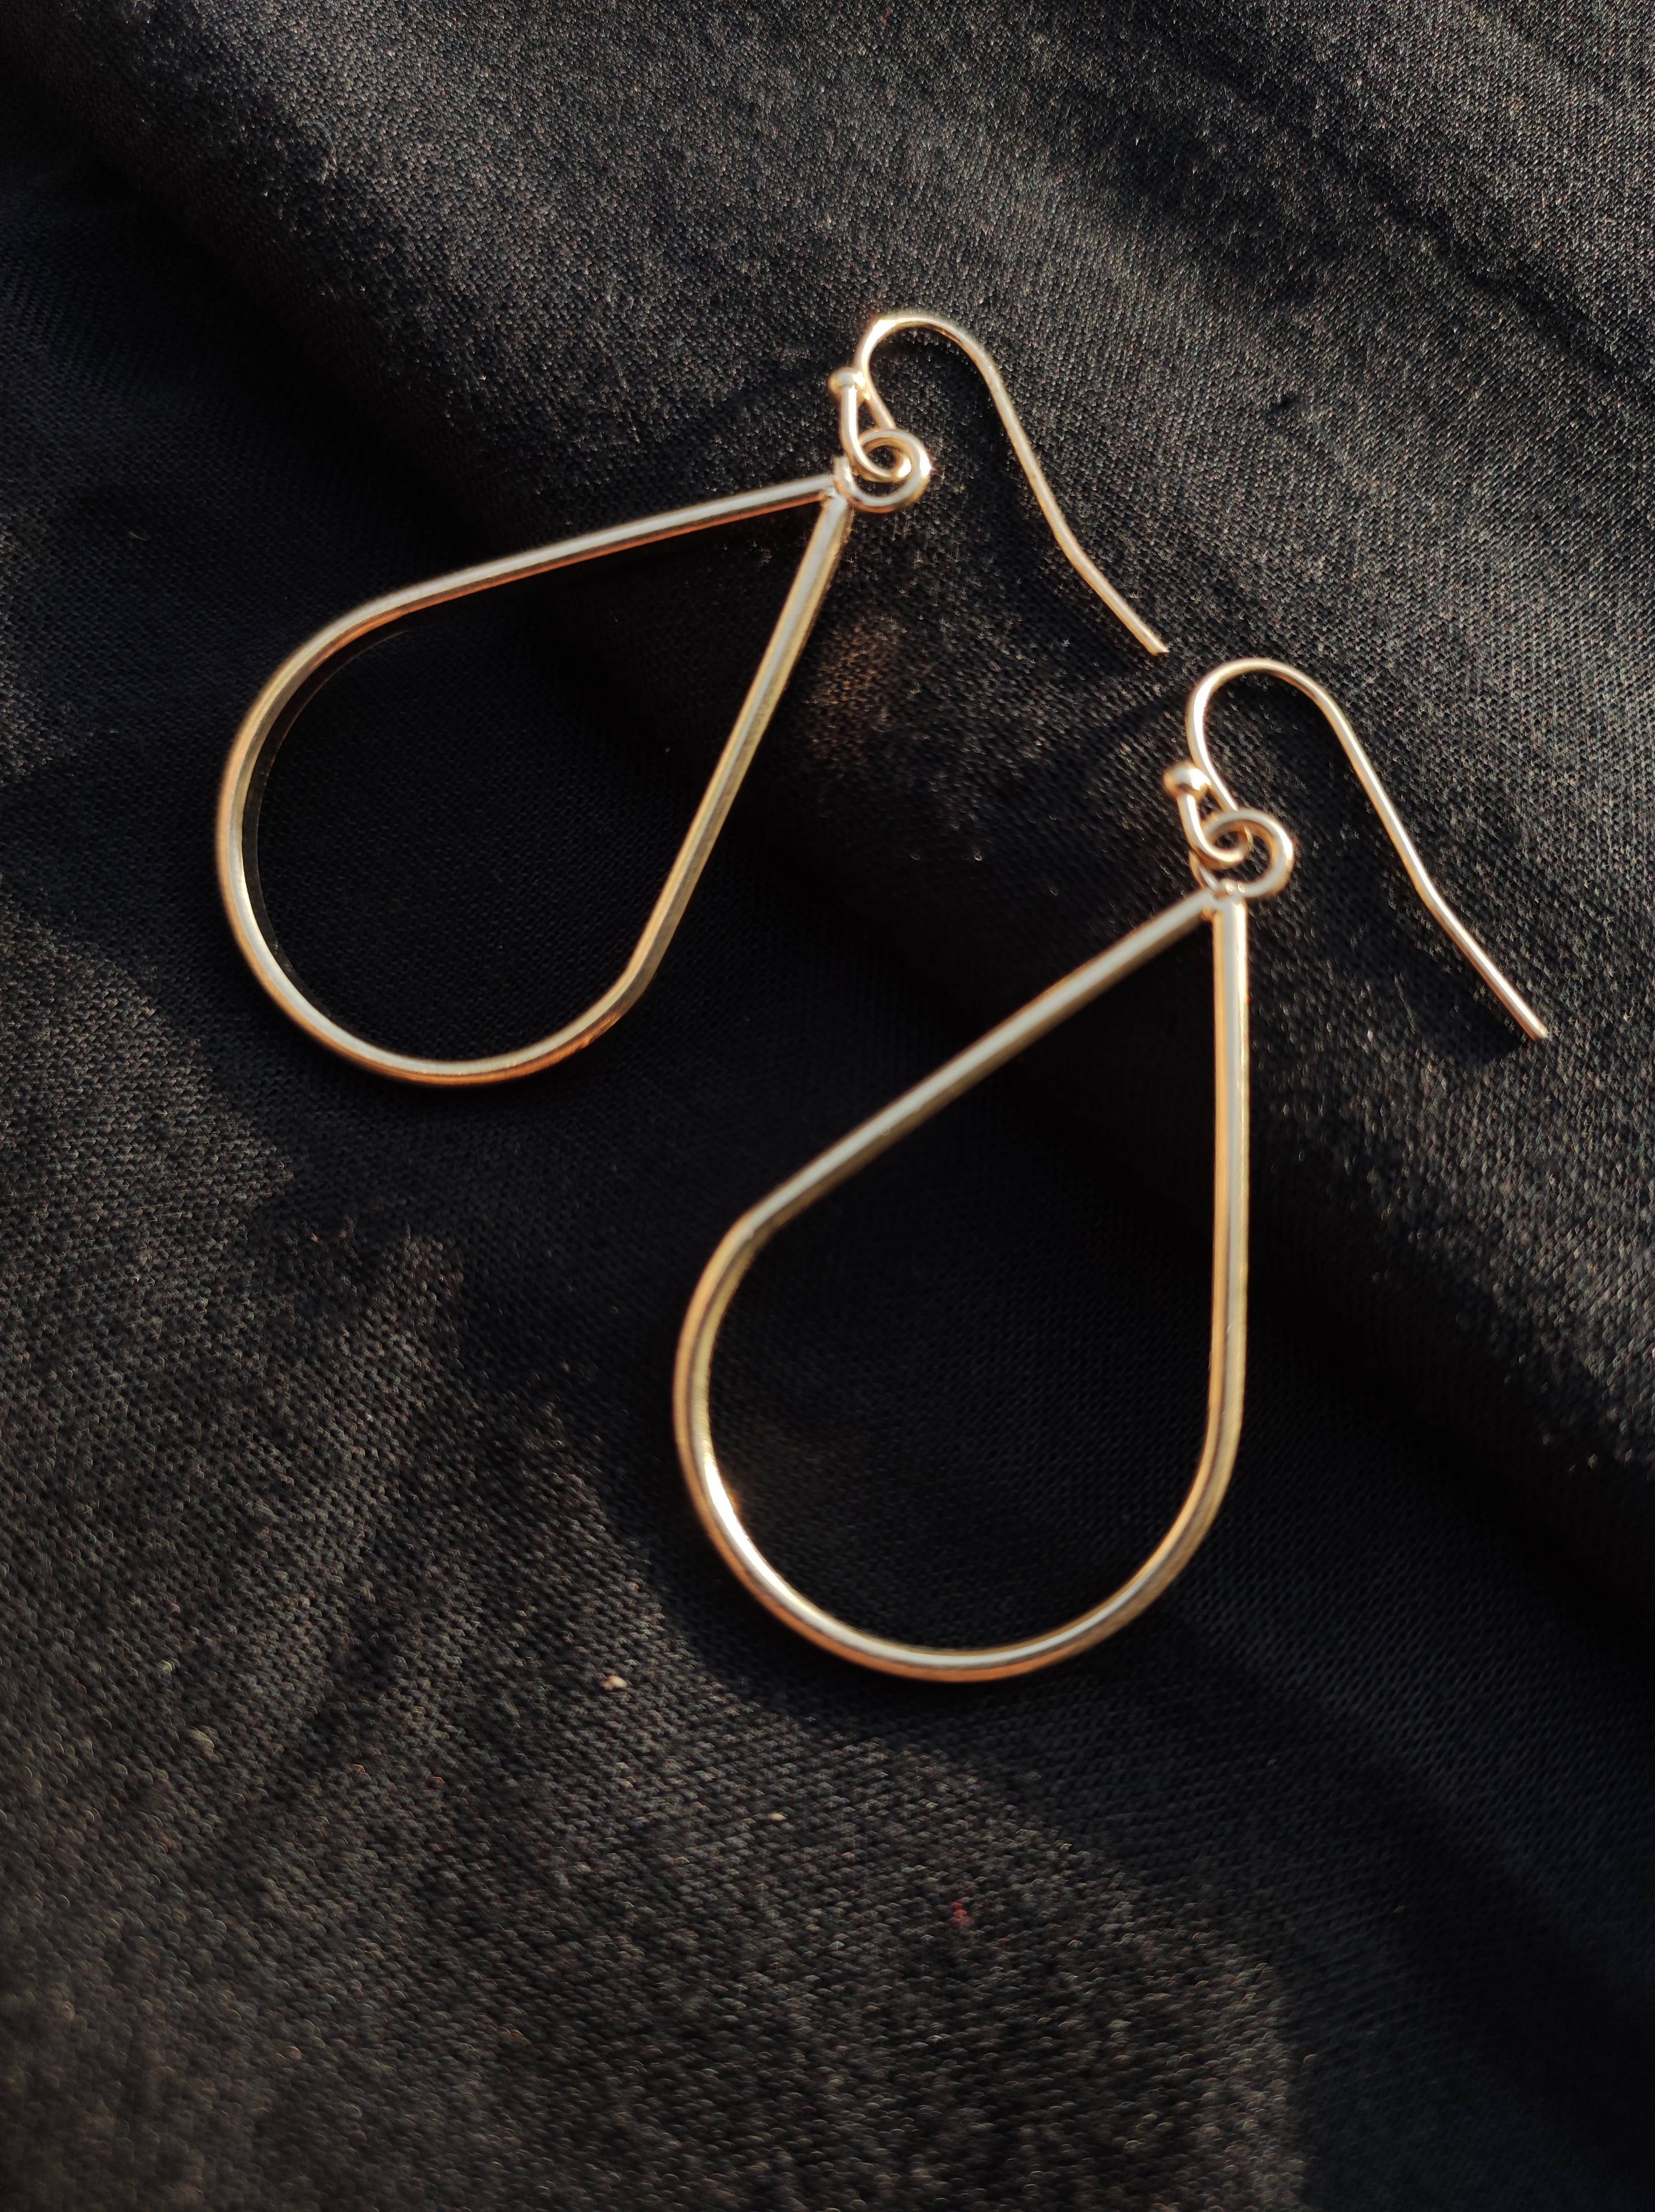 Shein | Earrings golden hoops | Women jewelry| Brand New with Tags